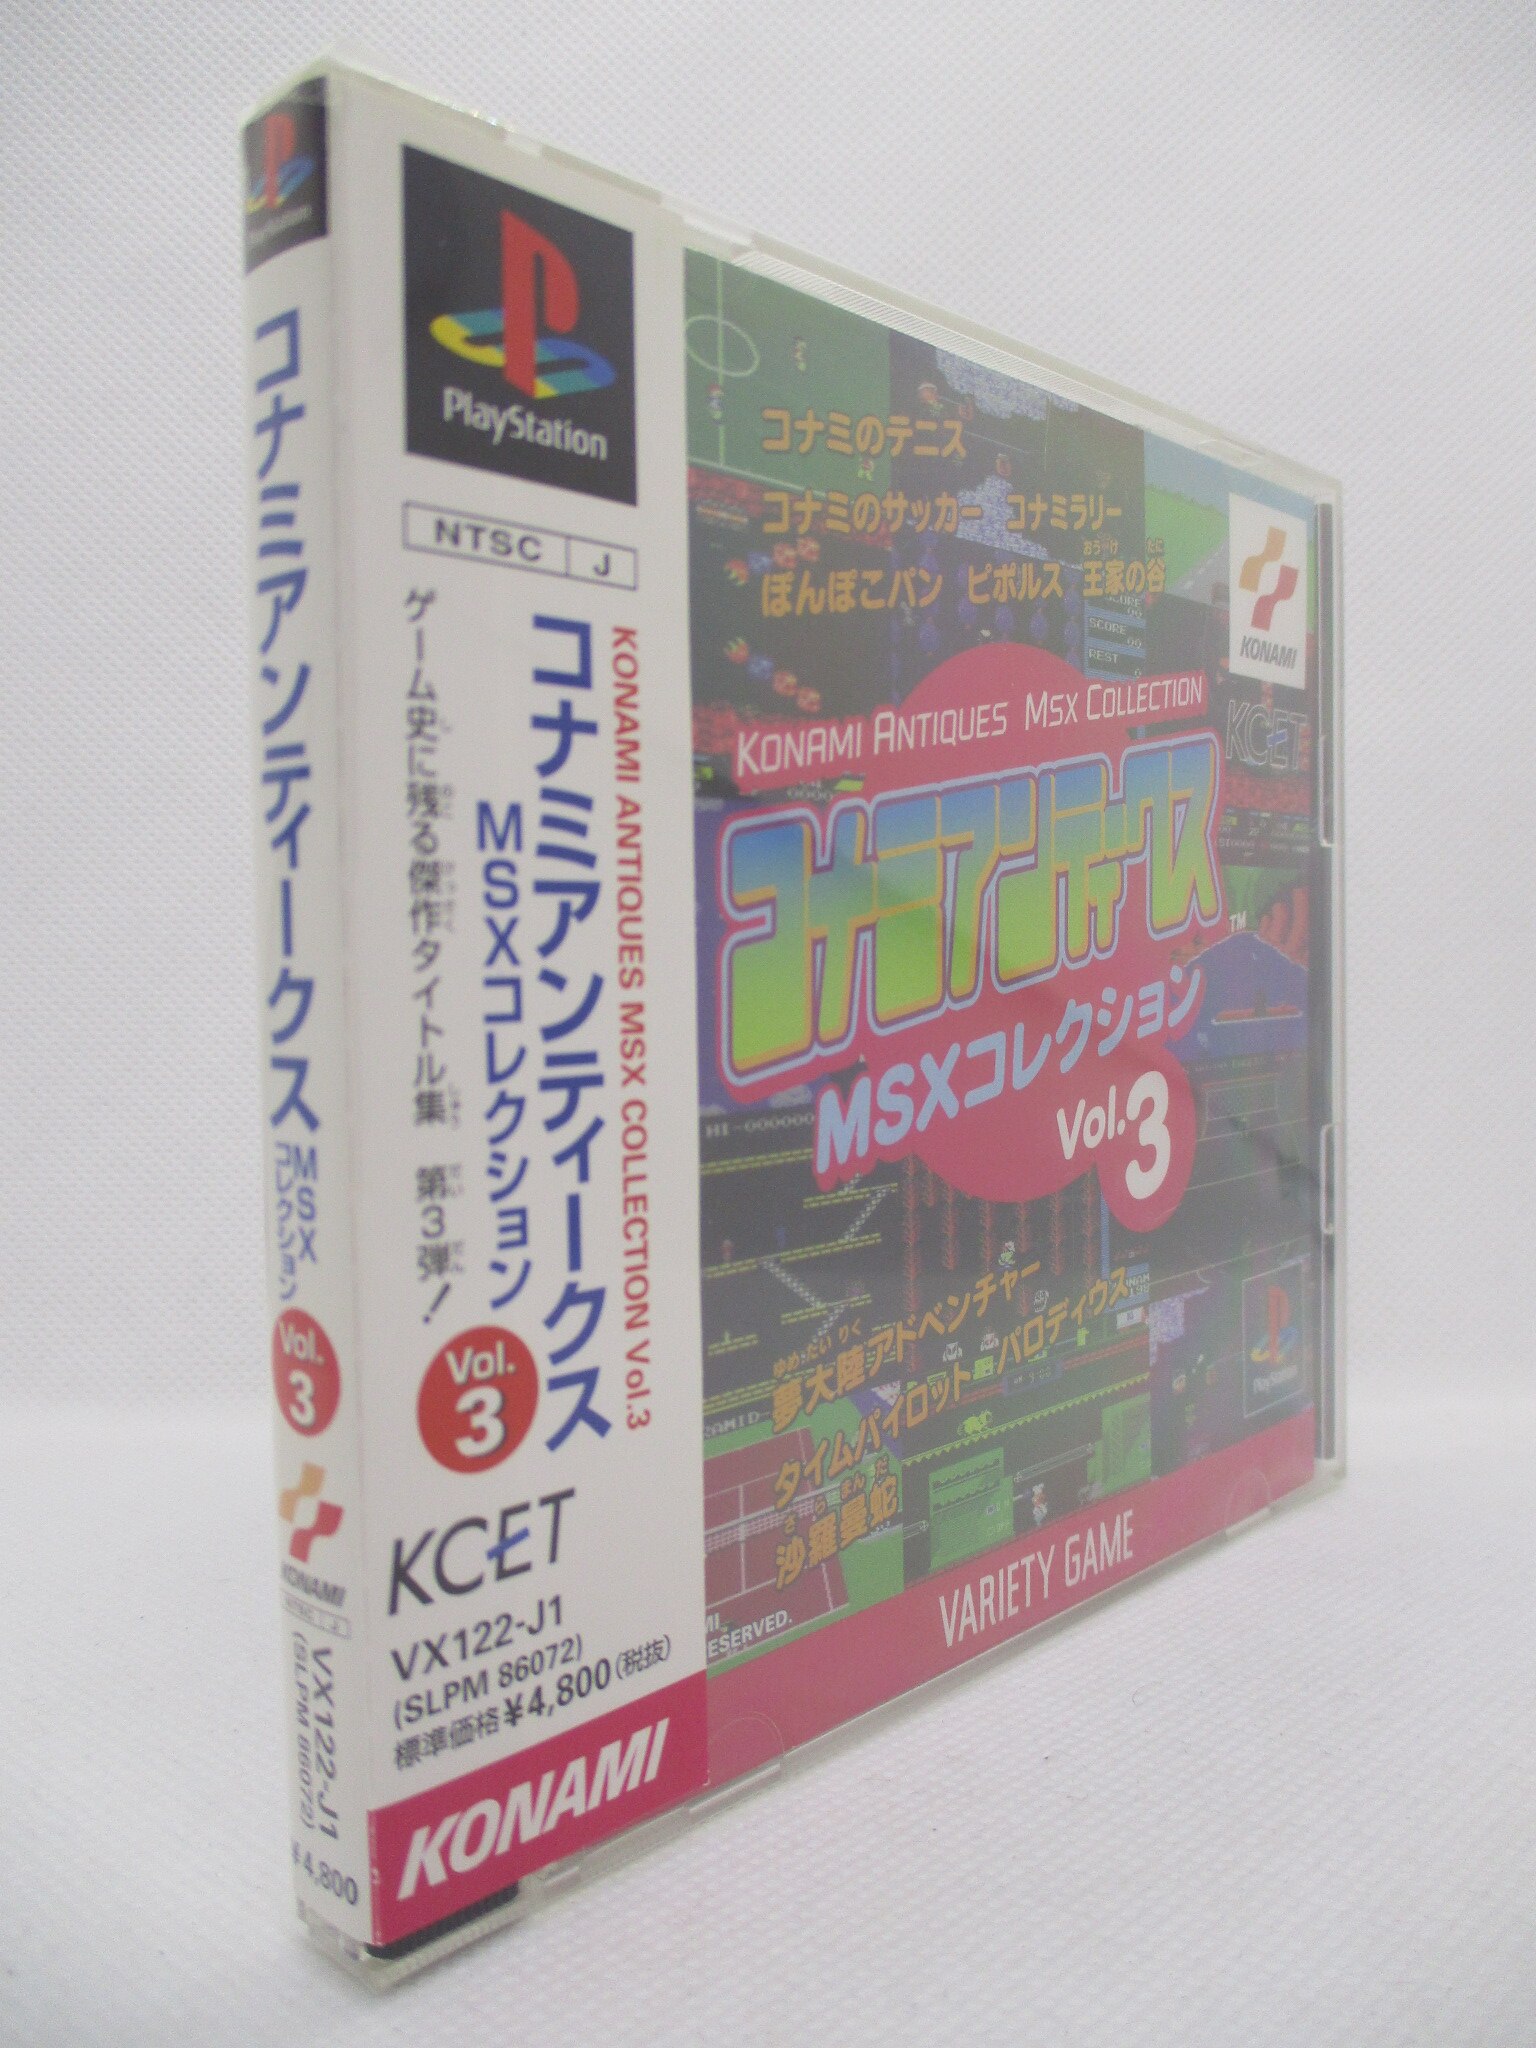 PS コナミアンティークス MSXコレクション Vol.３ | まんだらけ Mandarake